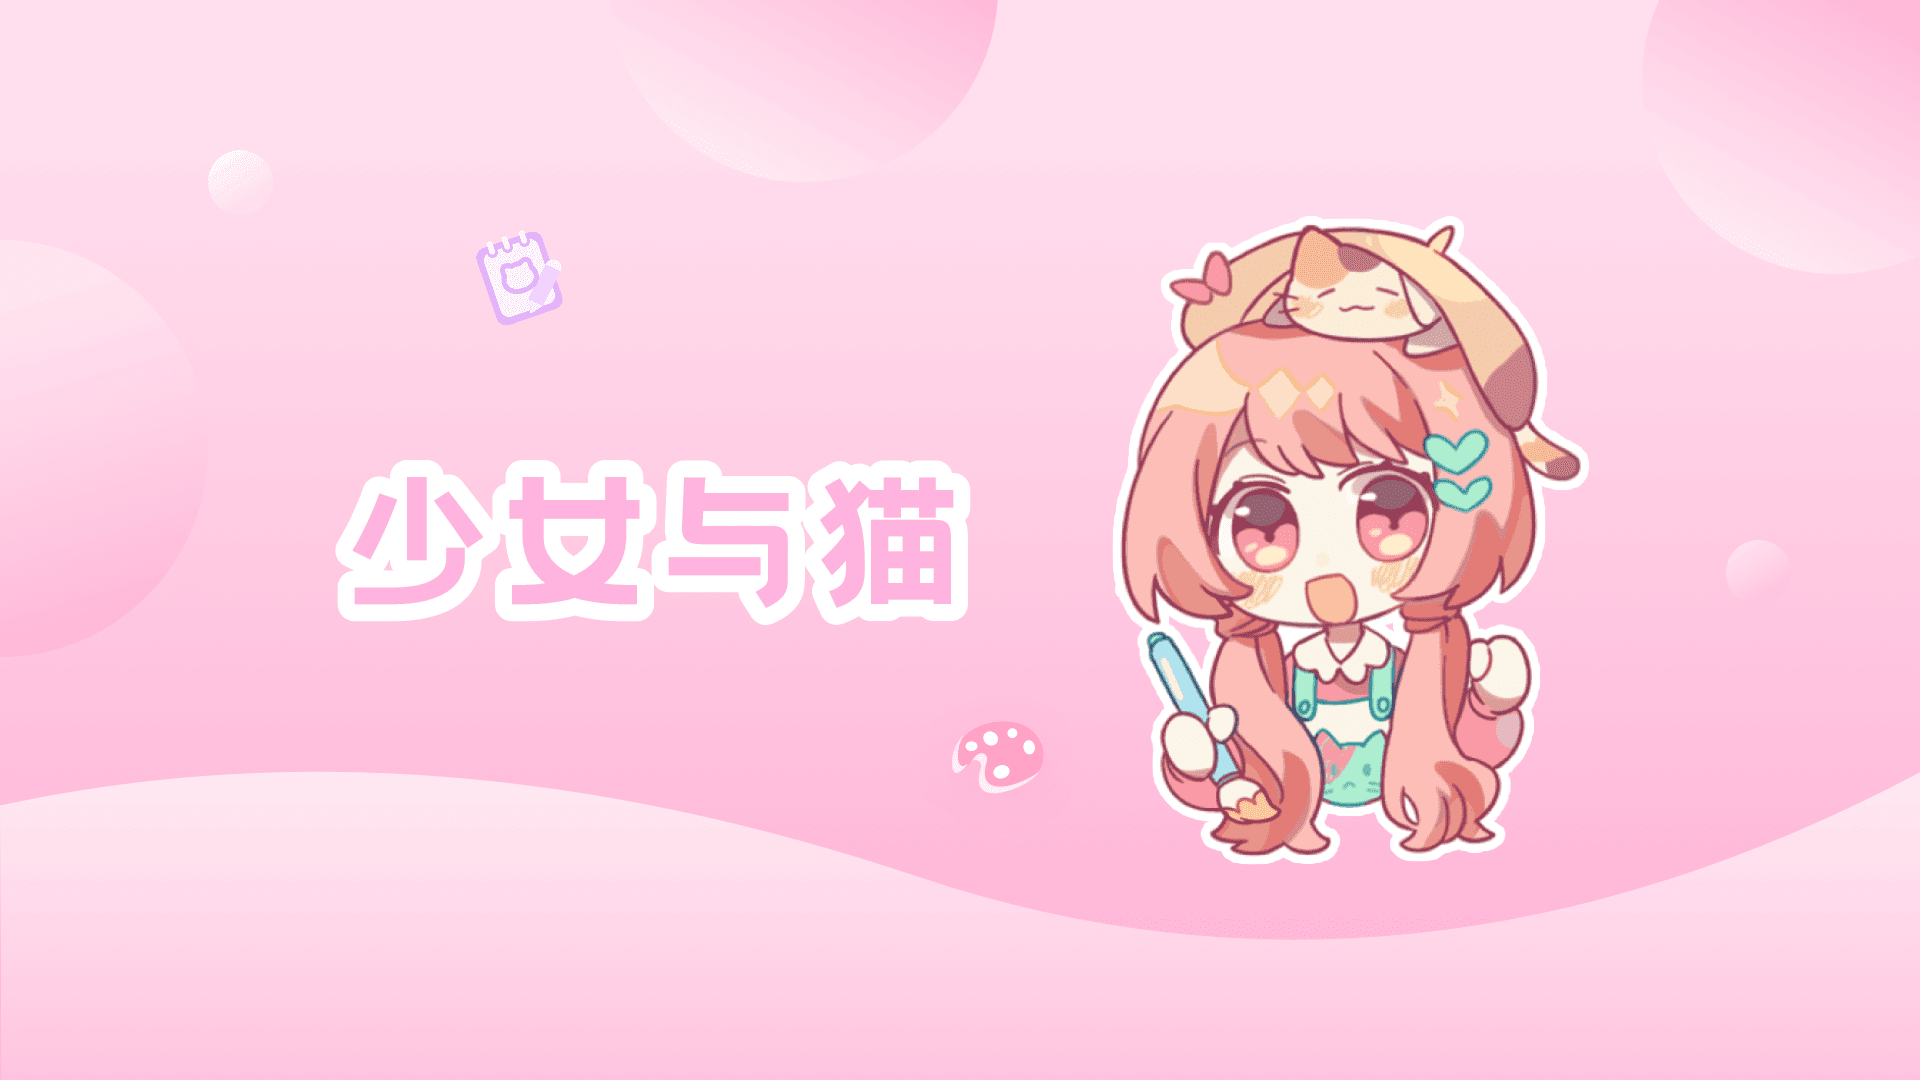 Banner of 少女と猫 1.4.3